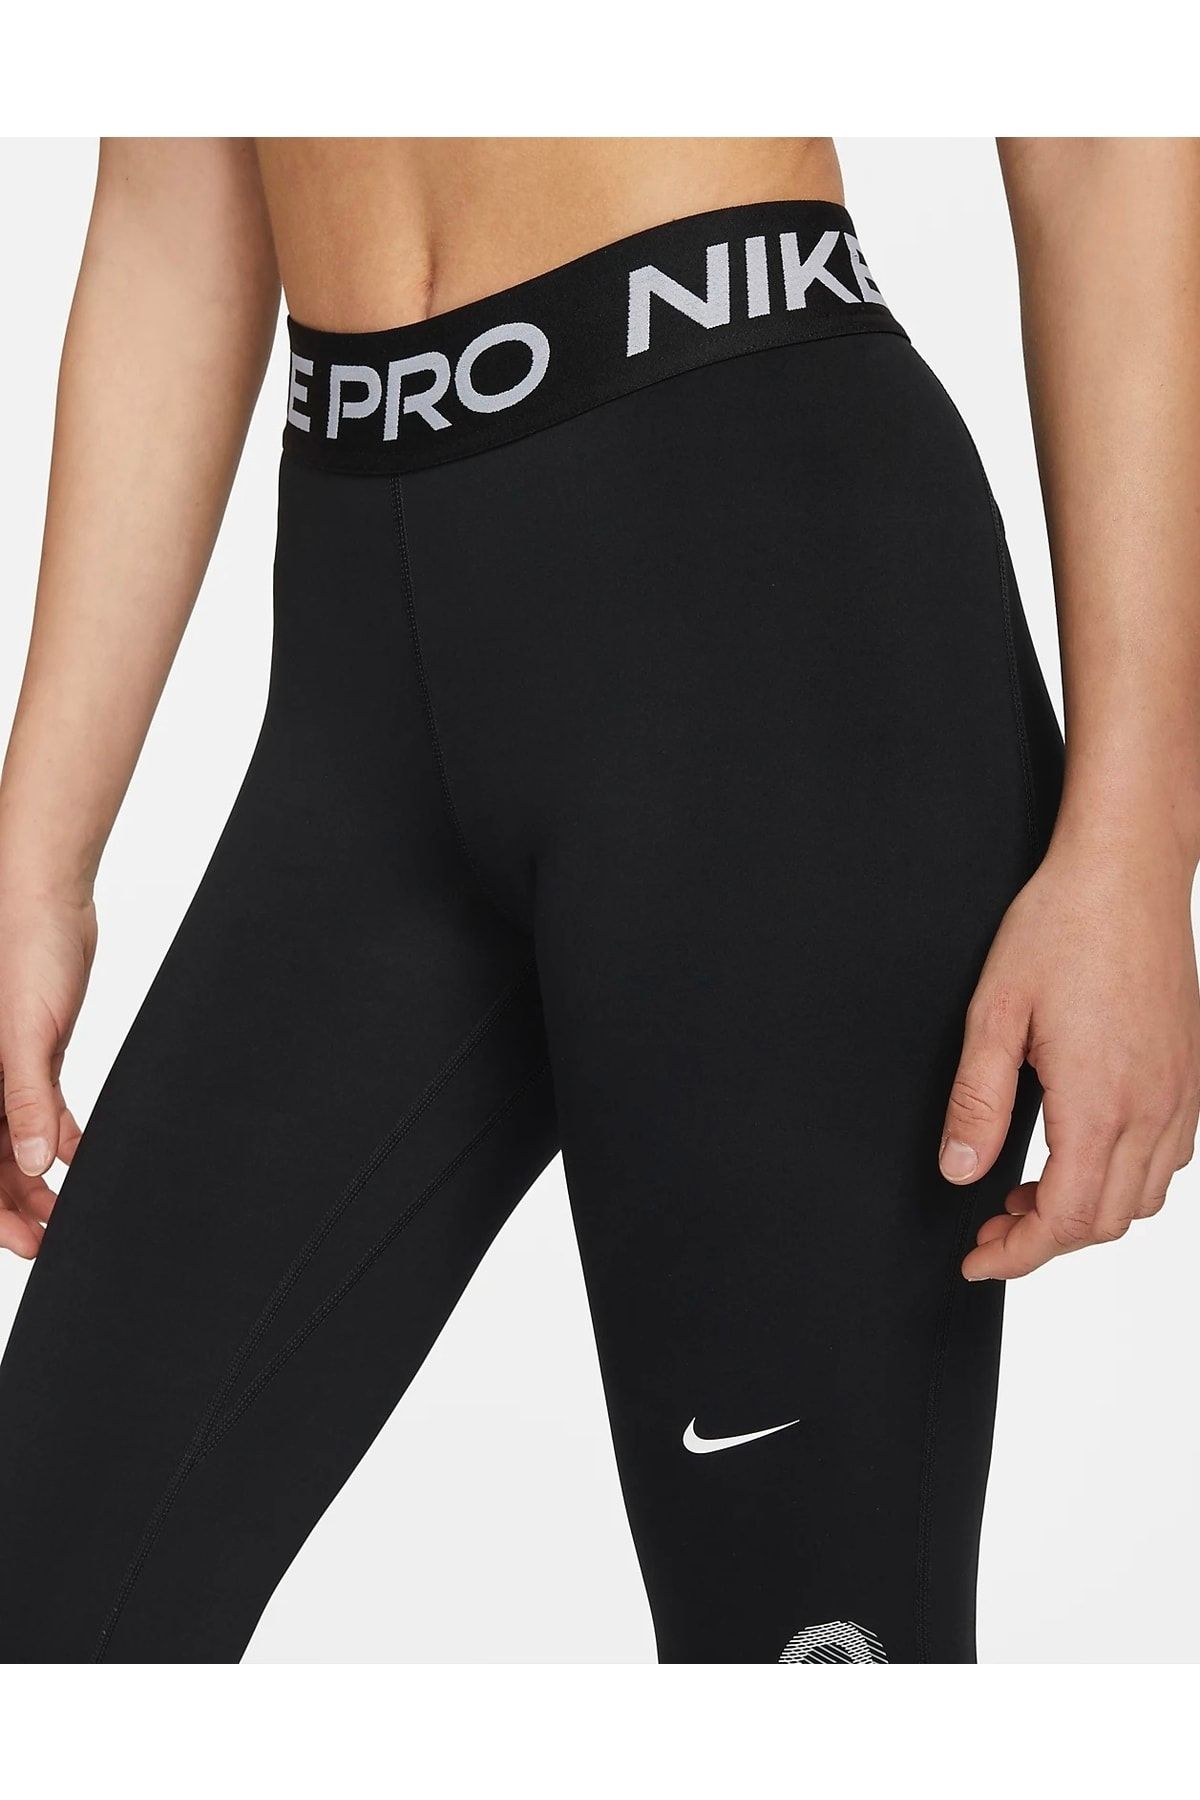 Nike Pro Dri Fit AO9972-010 Crop Training Tights Size S Women's Black